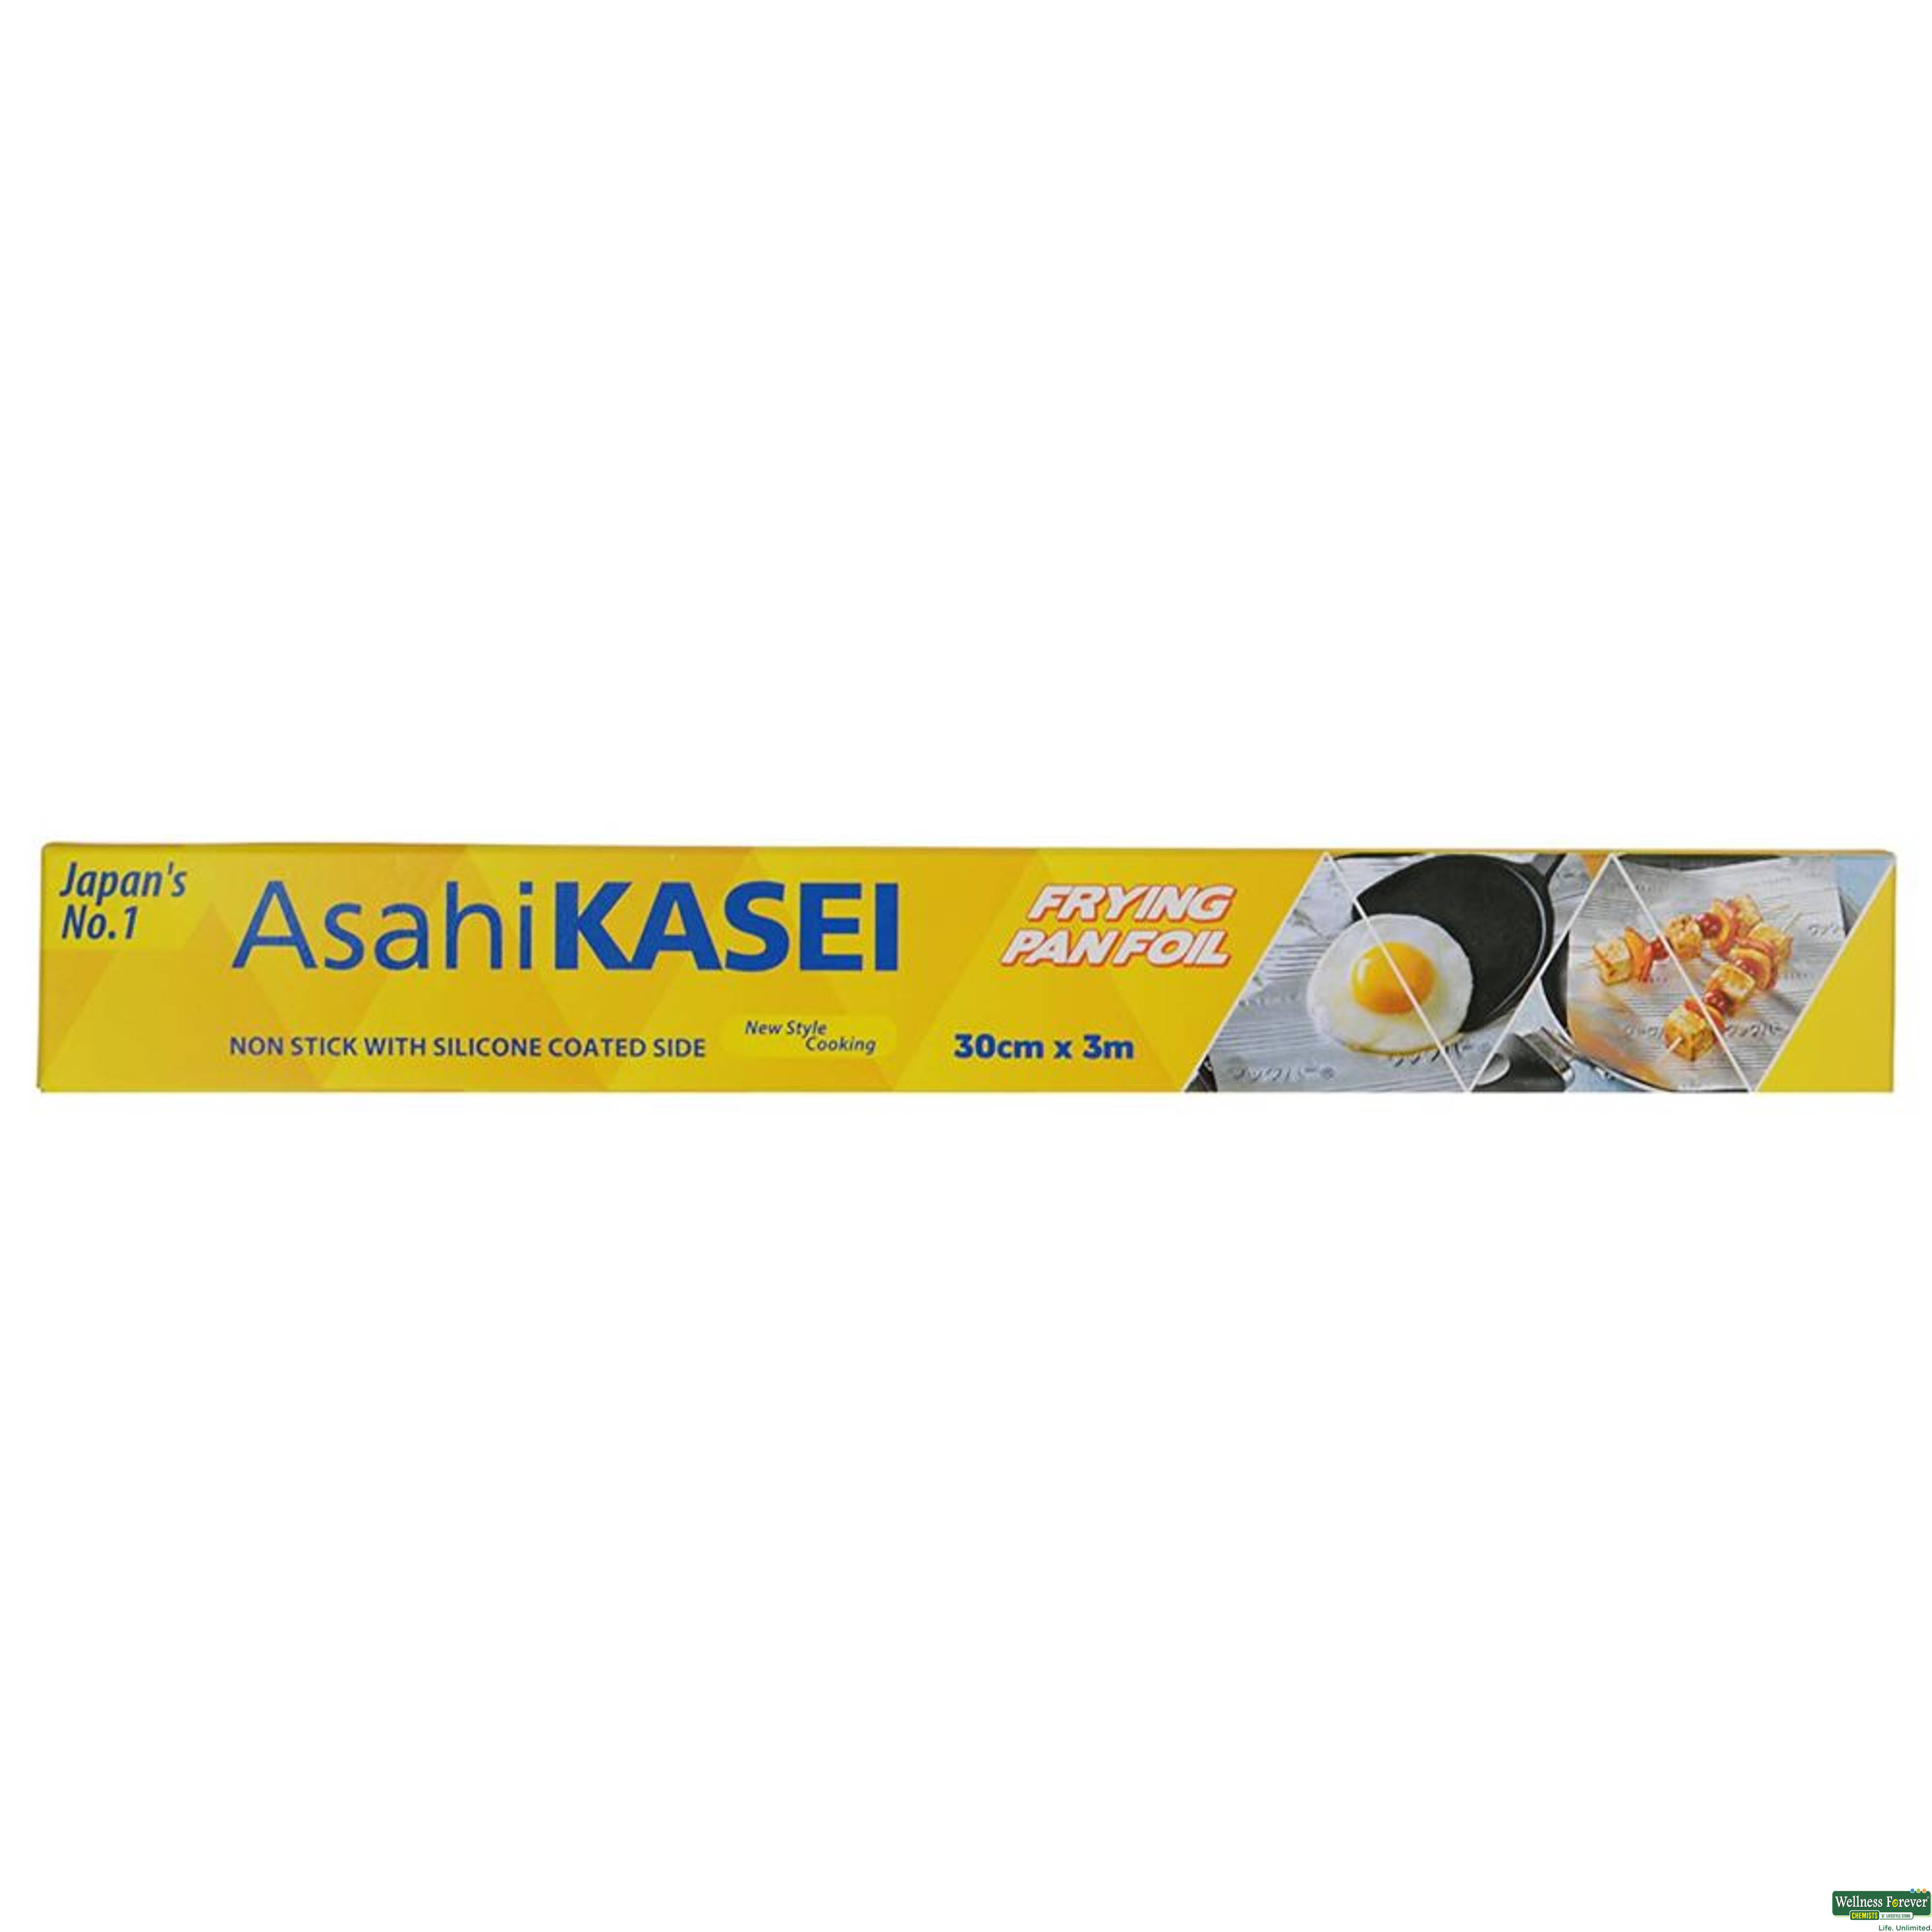 Asahi Kasei Premium Foil Wrap 22 cm X 20 m, 1 pc-image